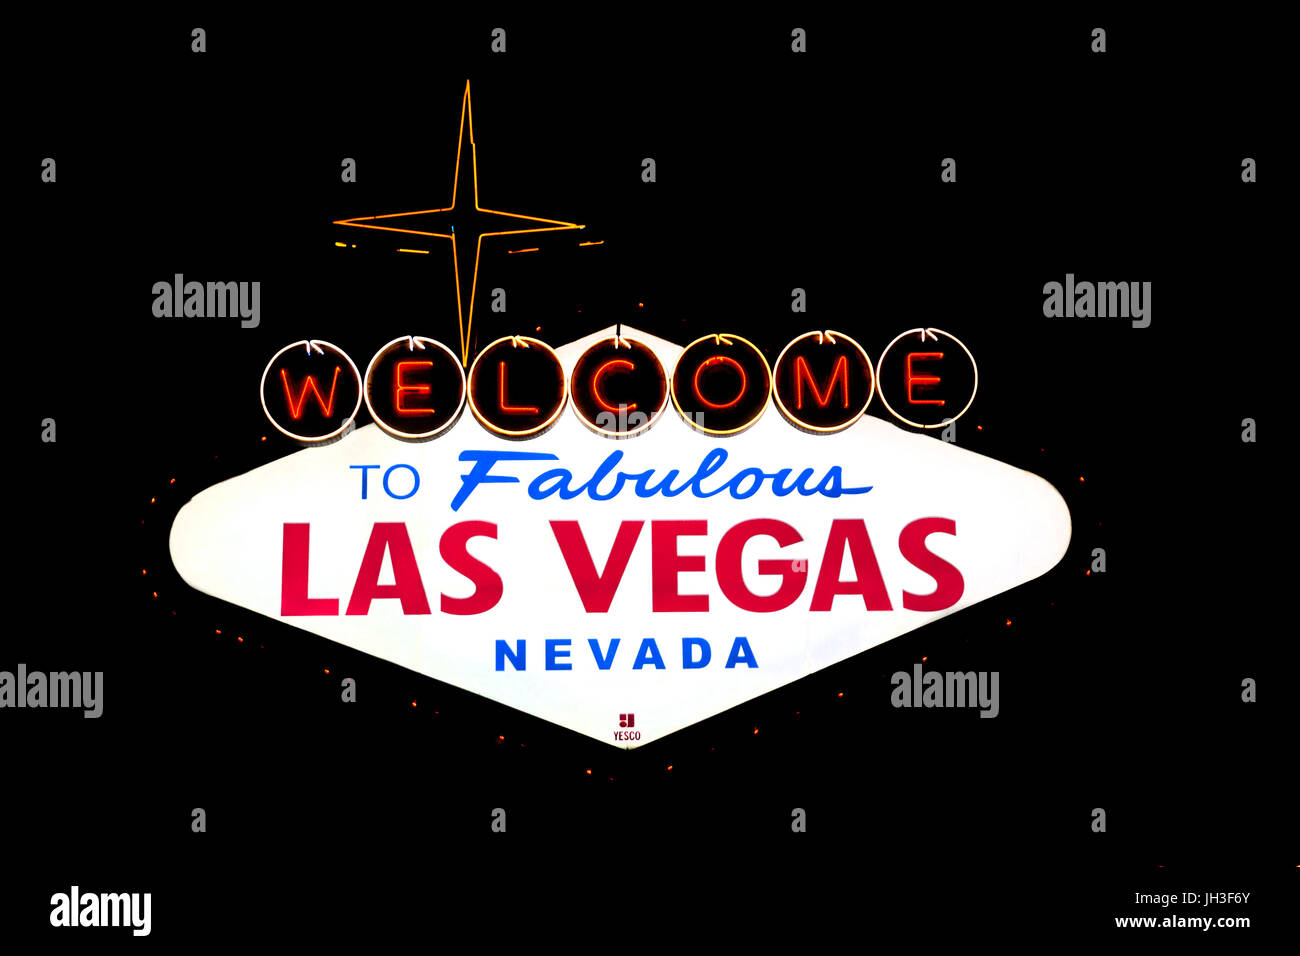 Iconic Welcome to Fabulous Las Vegas Nevada sign. Isolated on black background. Stock Photo